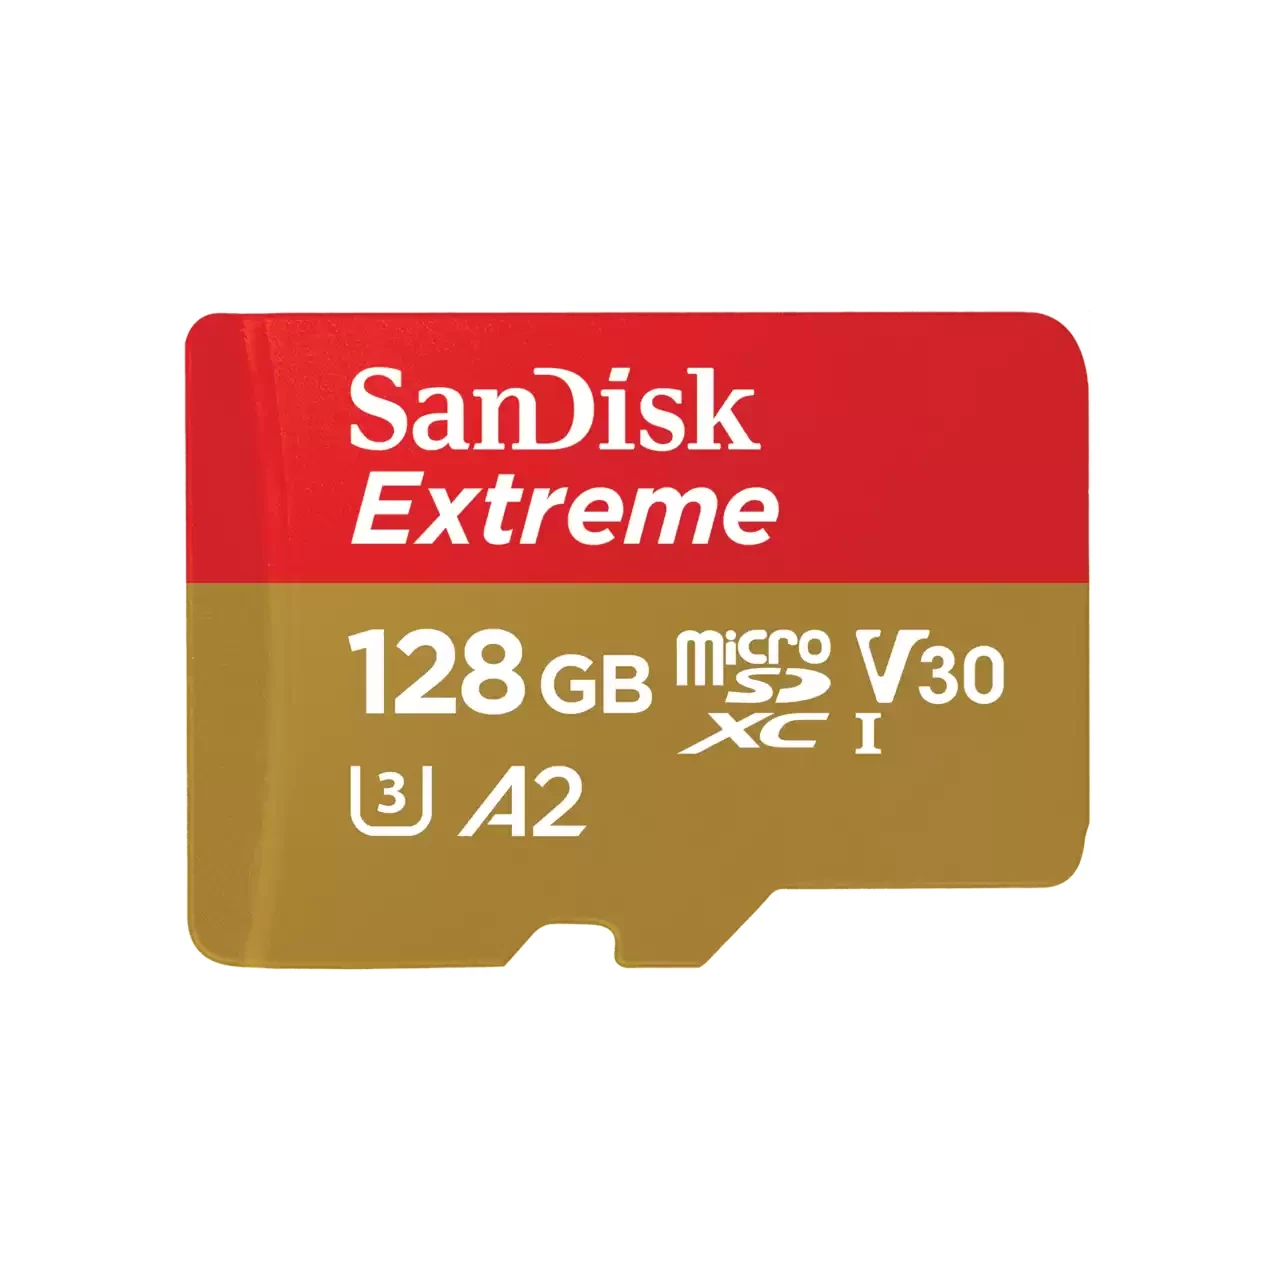 Sandisk Extreme 128Gb MicroSDXC UHS-I Memory Card #SDSQXAA-128G